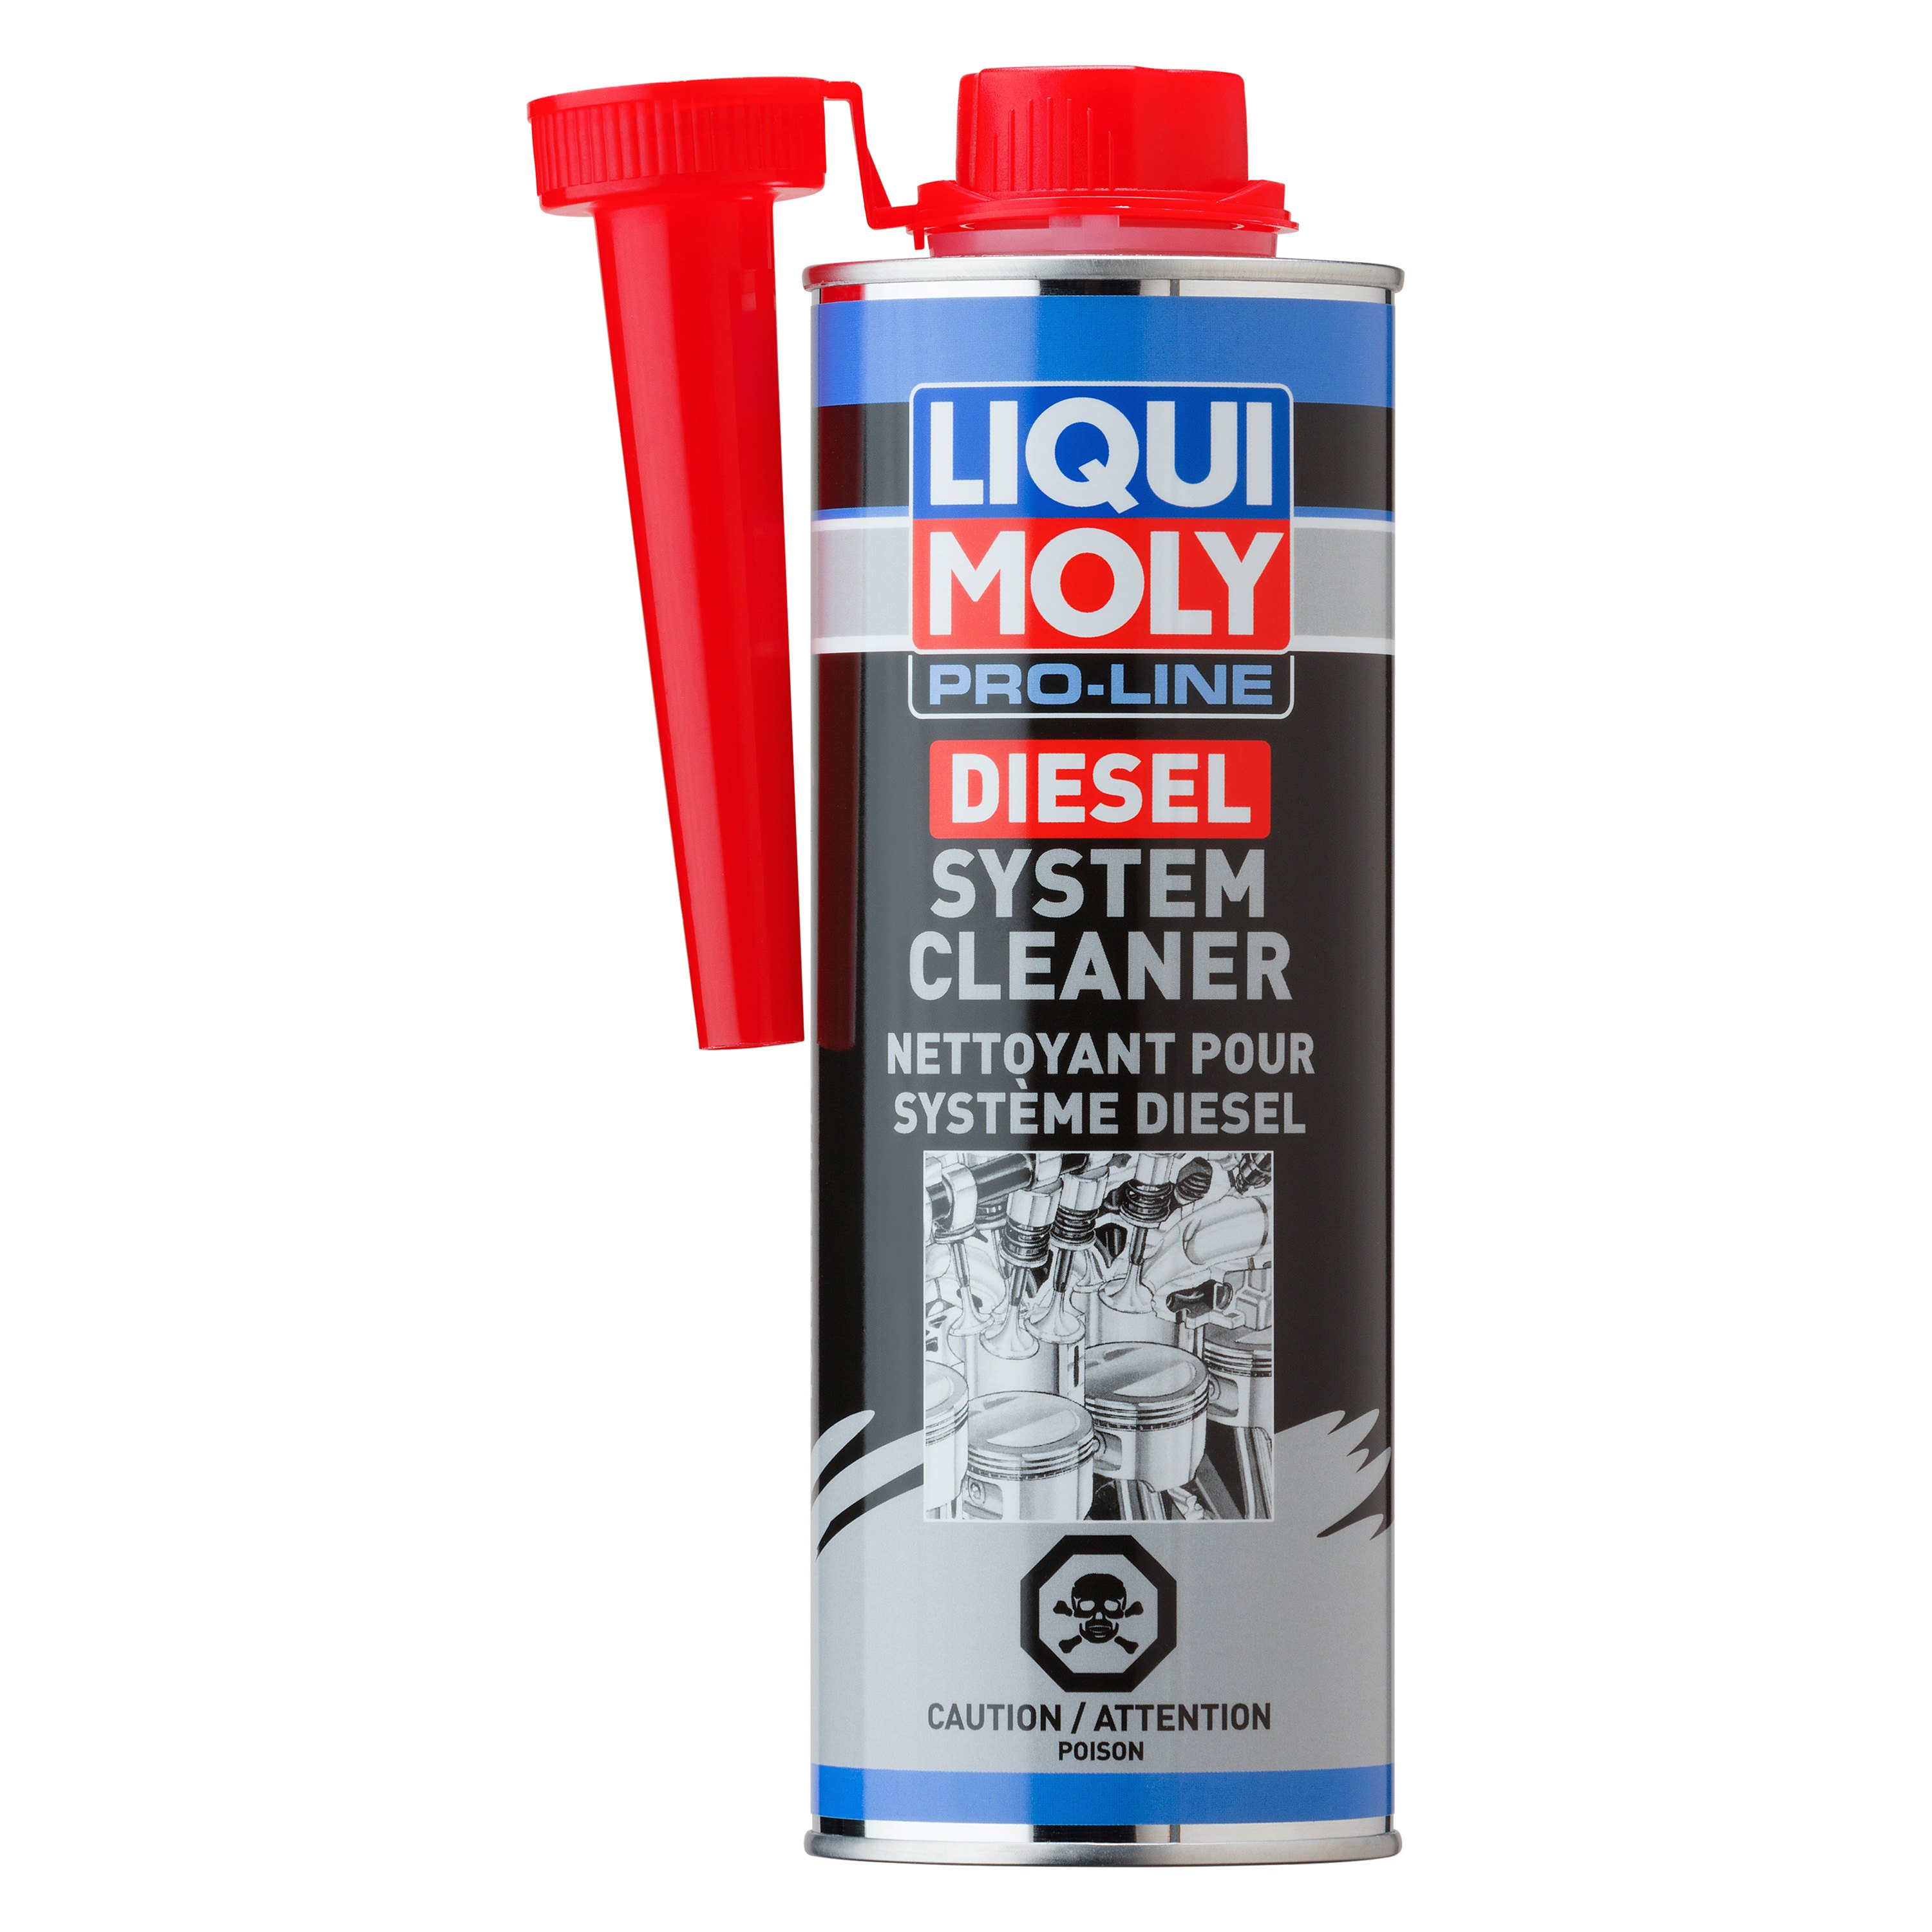 Ликви ком. Liqui Moly Diesel. Liqui Moly Liqui clean. Liqui Moly Diesel Pro line. Присадка Liqui Moly Pro-line Diesel Intake System Cleaner 0.4л.